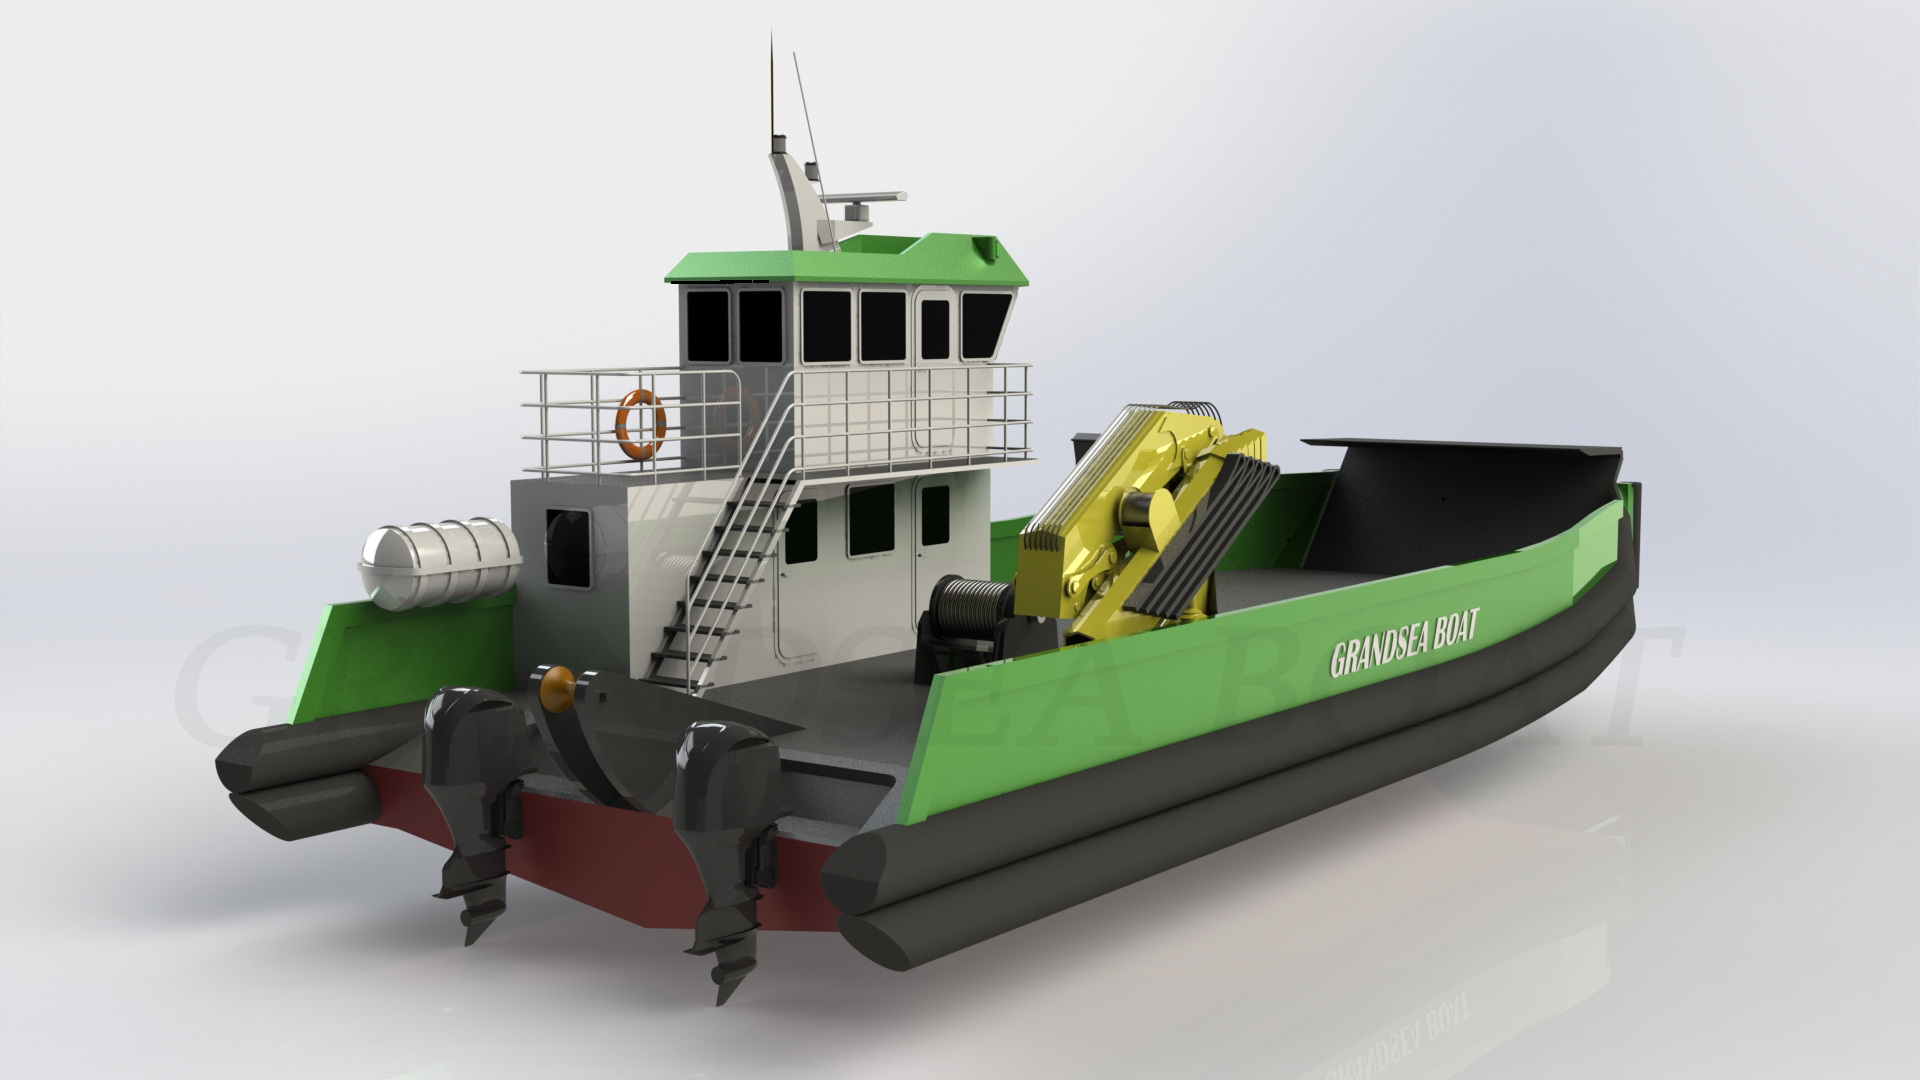  18m Aluminum Landing Craft Multi-purpose Work Barge Boat for Sale